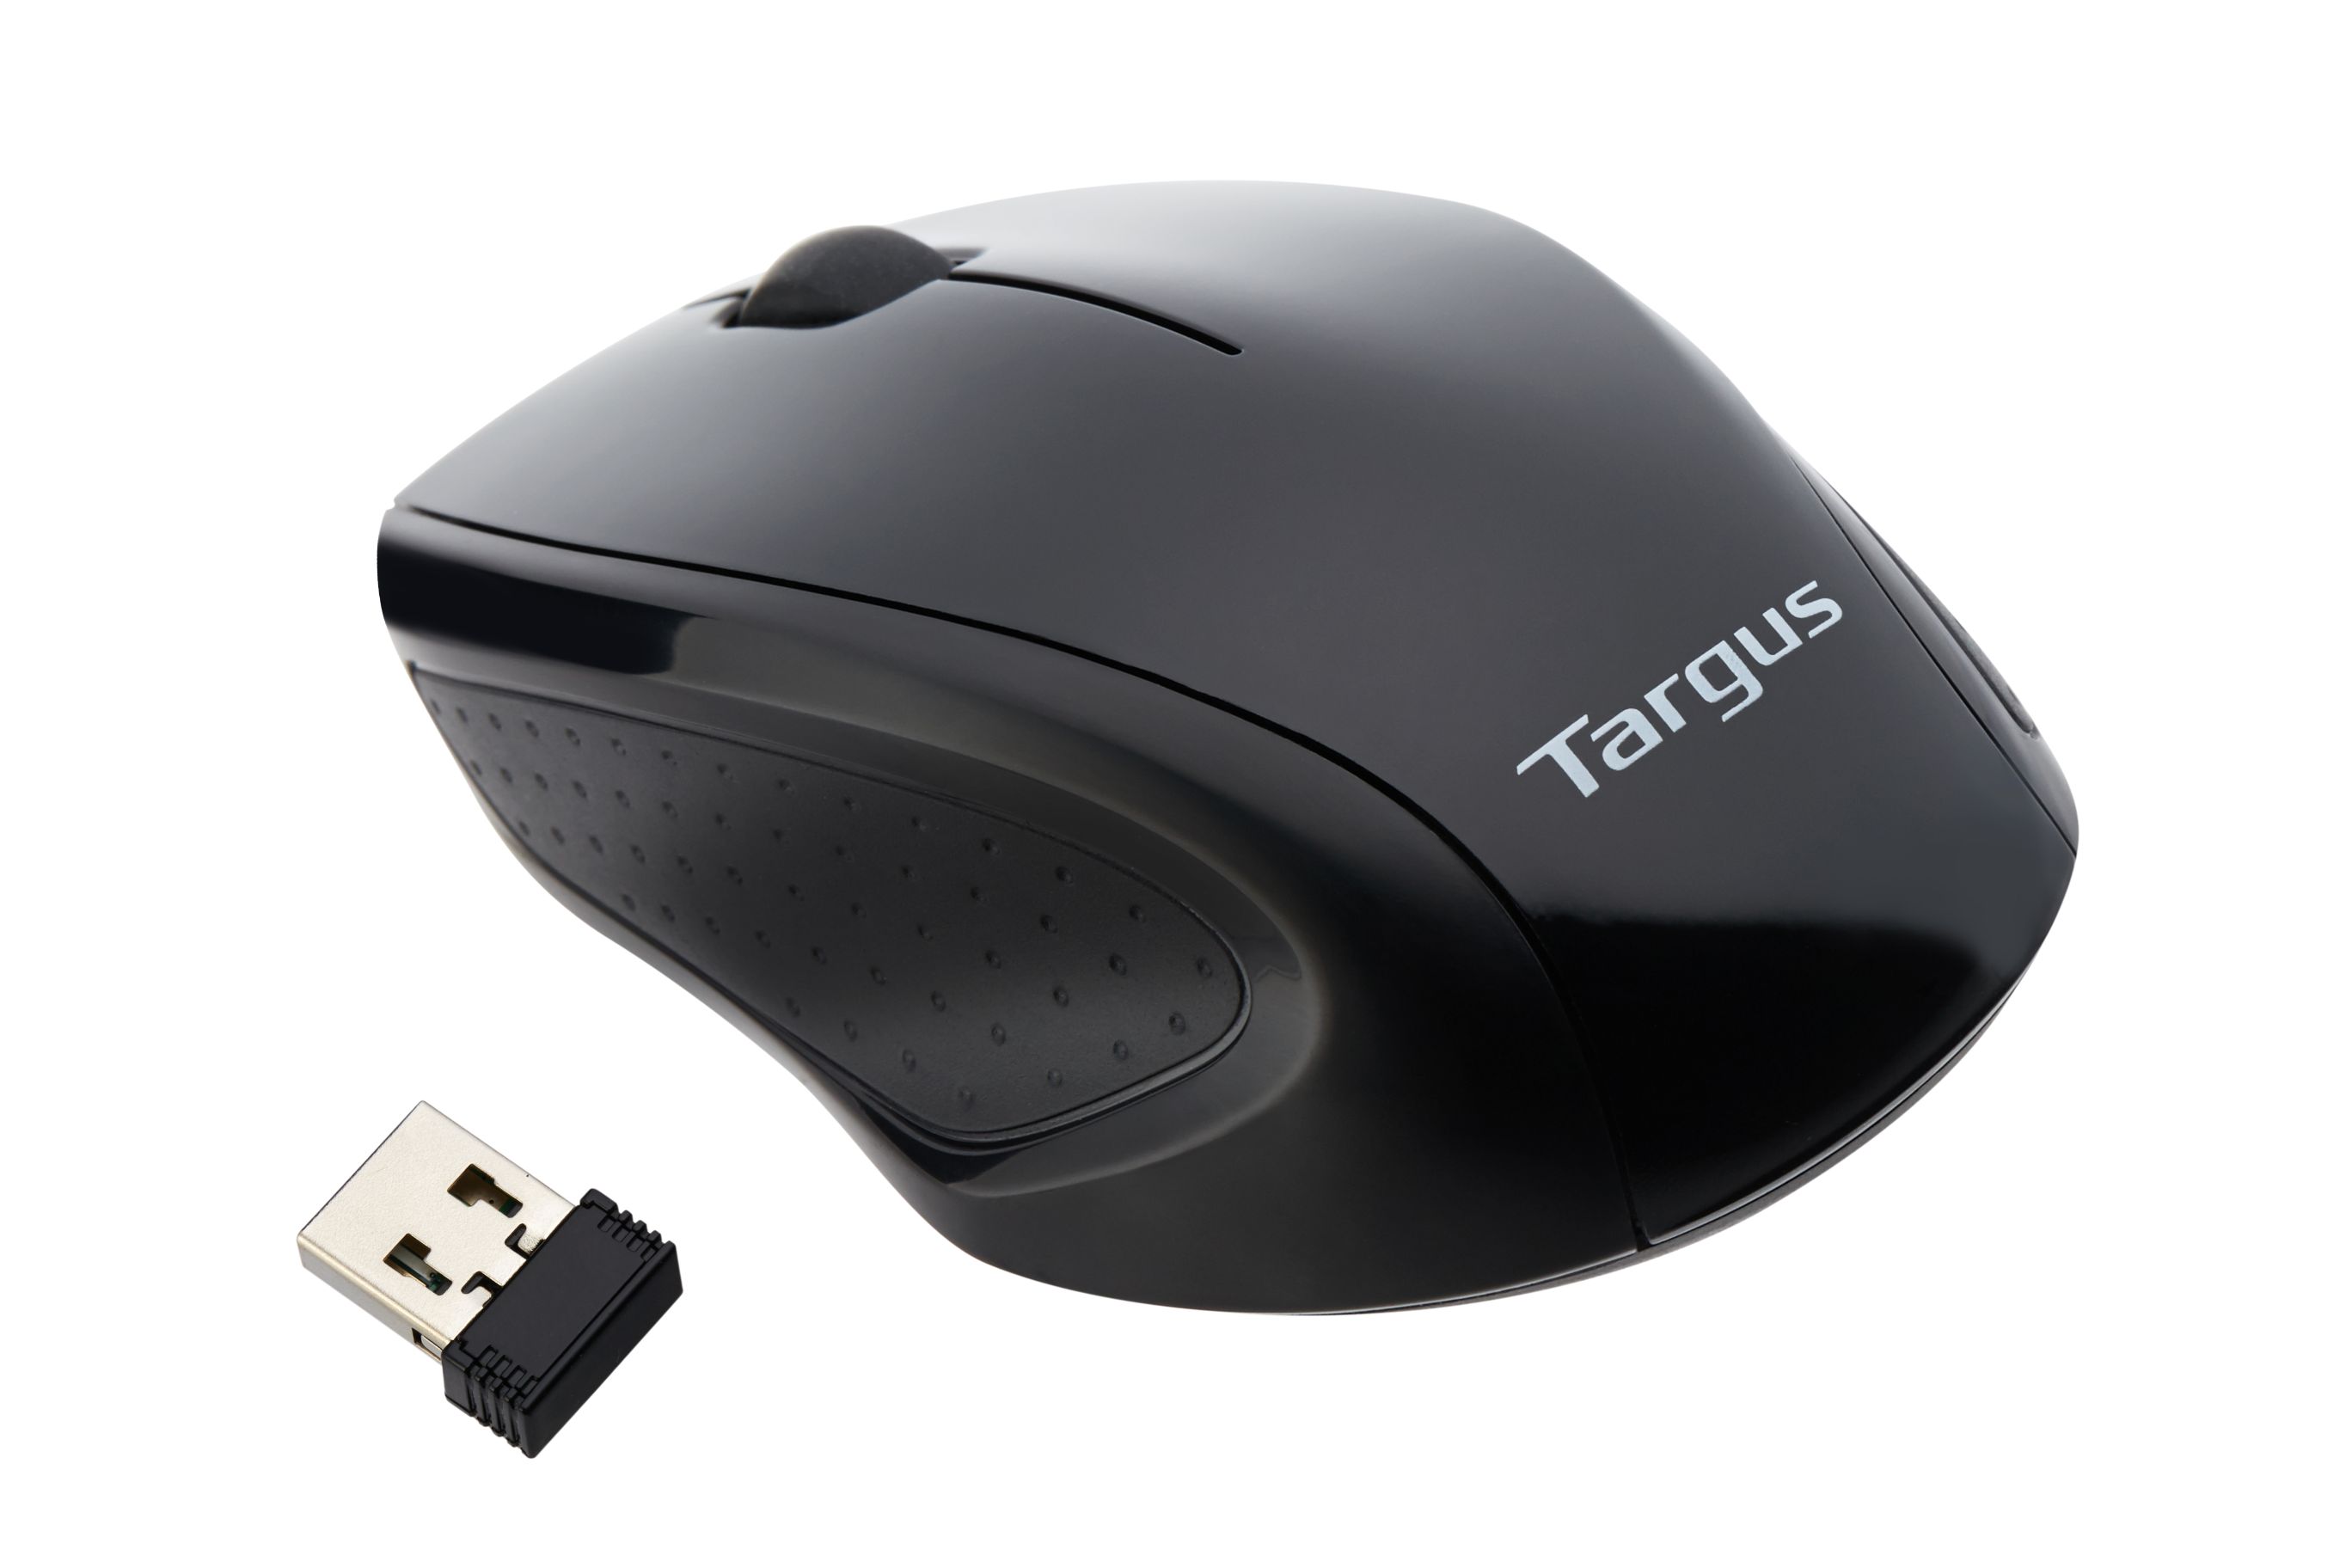 Targus mouse WL Optical <br /> Amw571 - Black